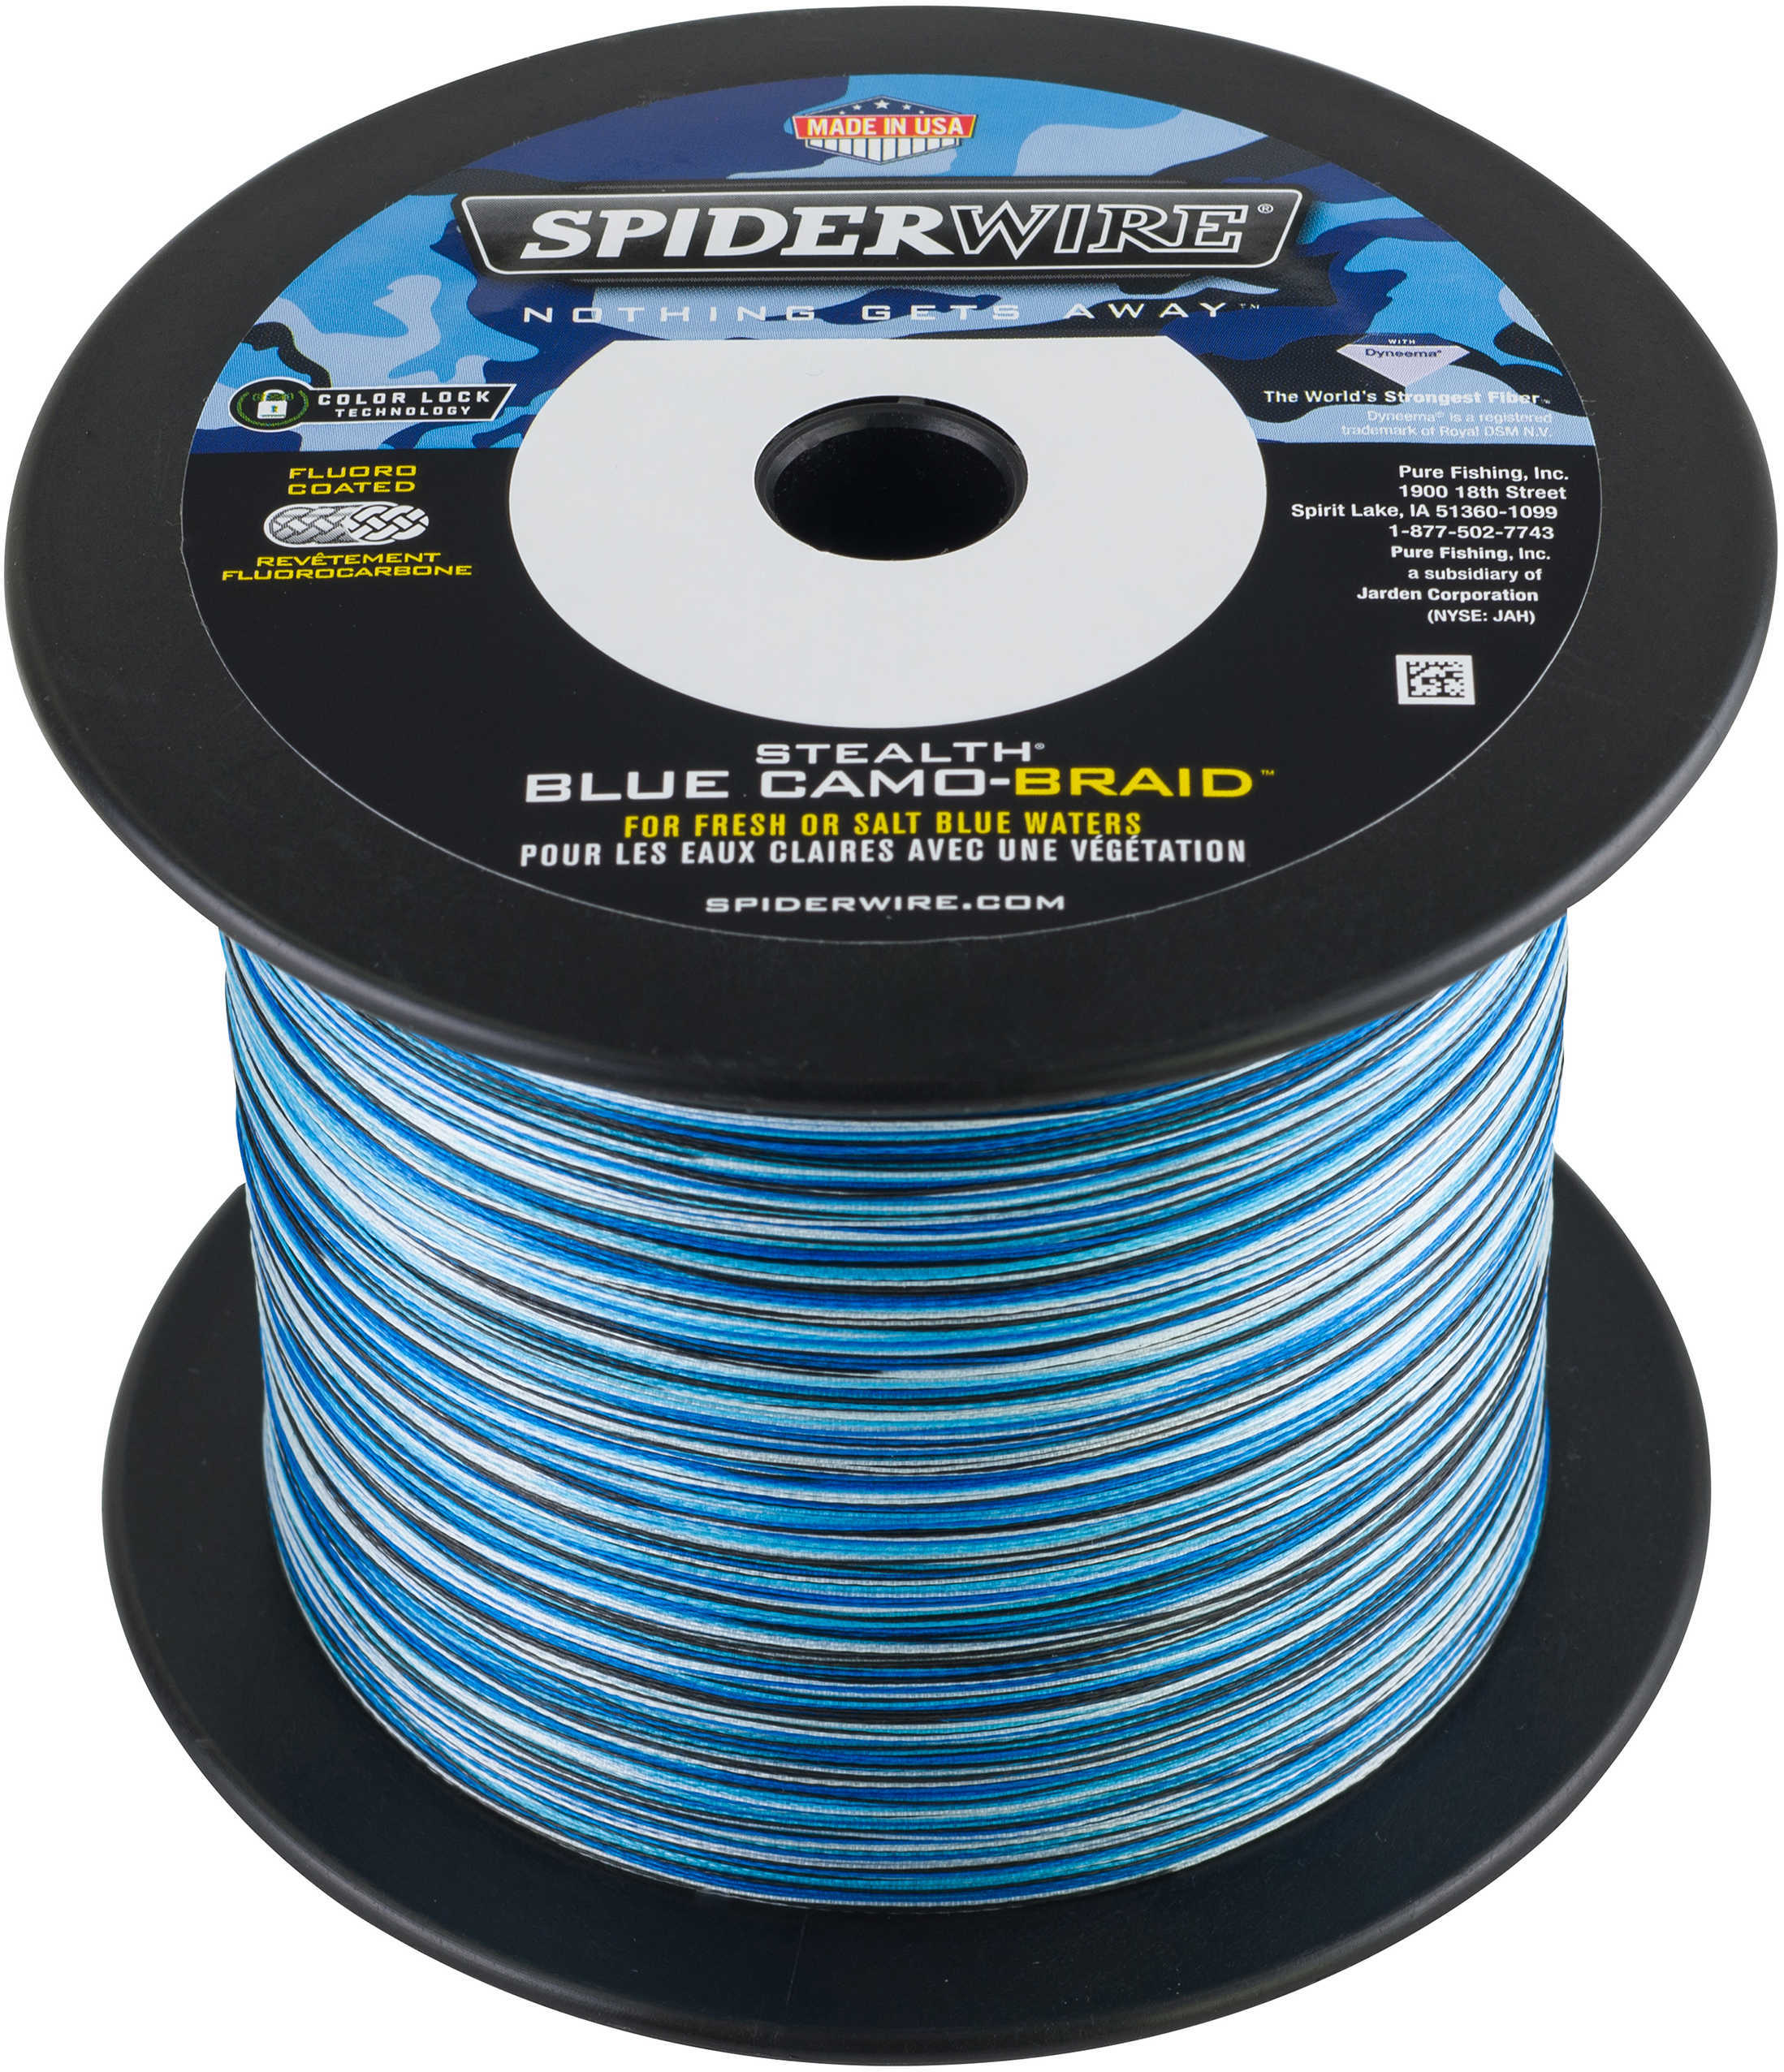 Spiderwire Stealth Braid 1500 Yards , 20 lbs Strength, 0.010" Diameter, Blue Camo Md: 1370455